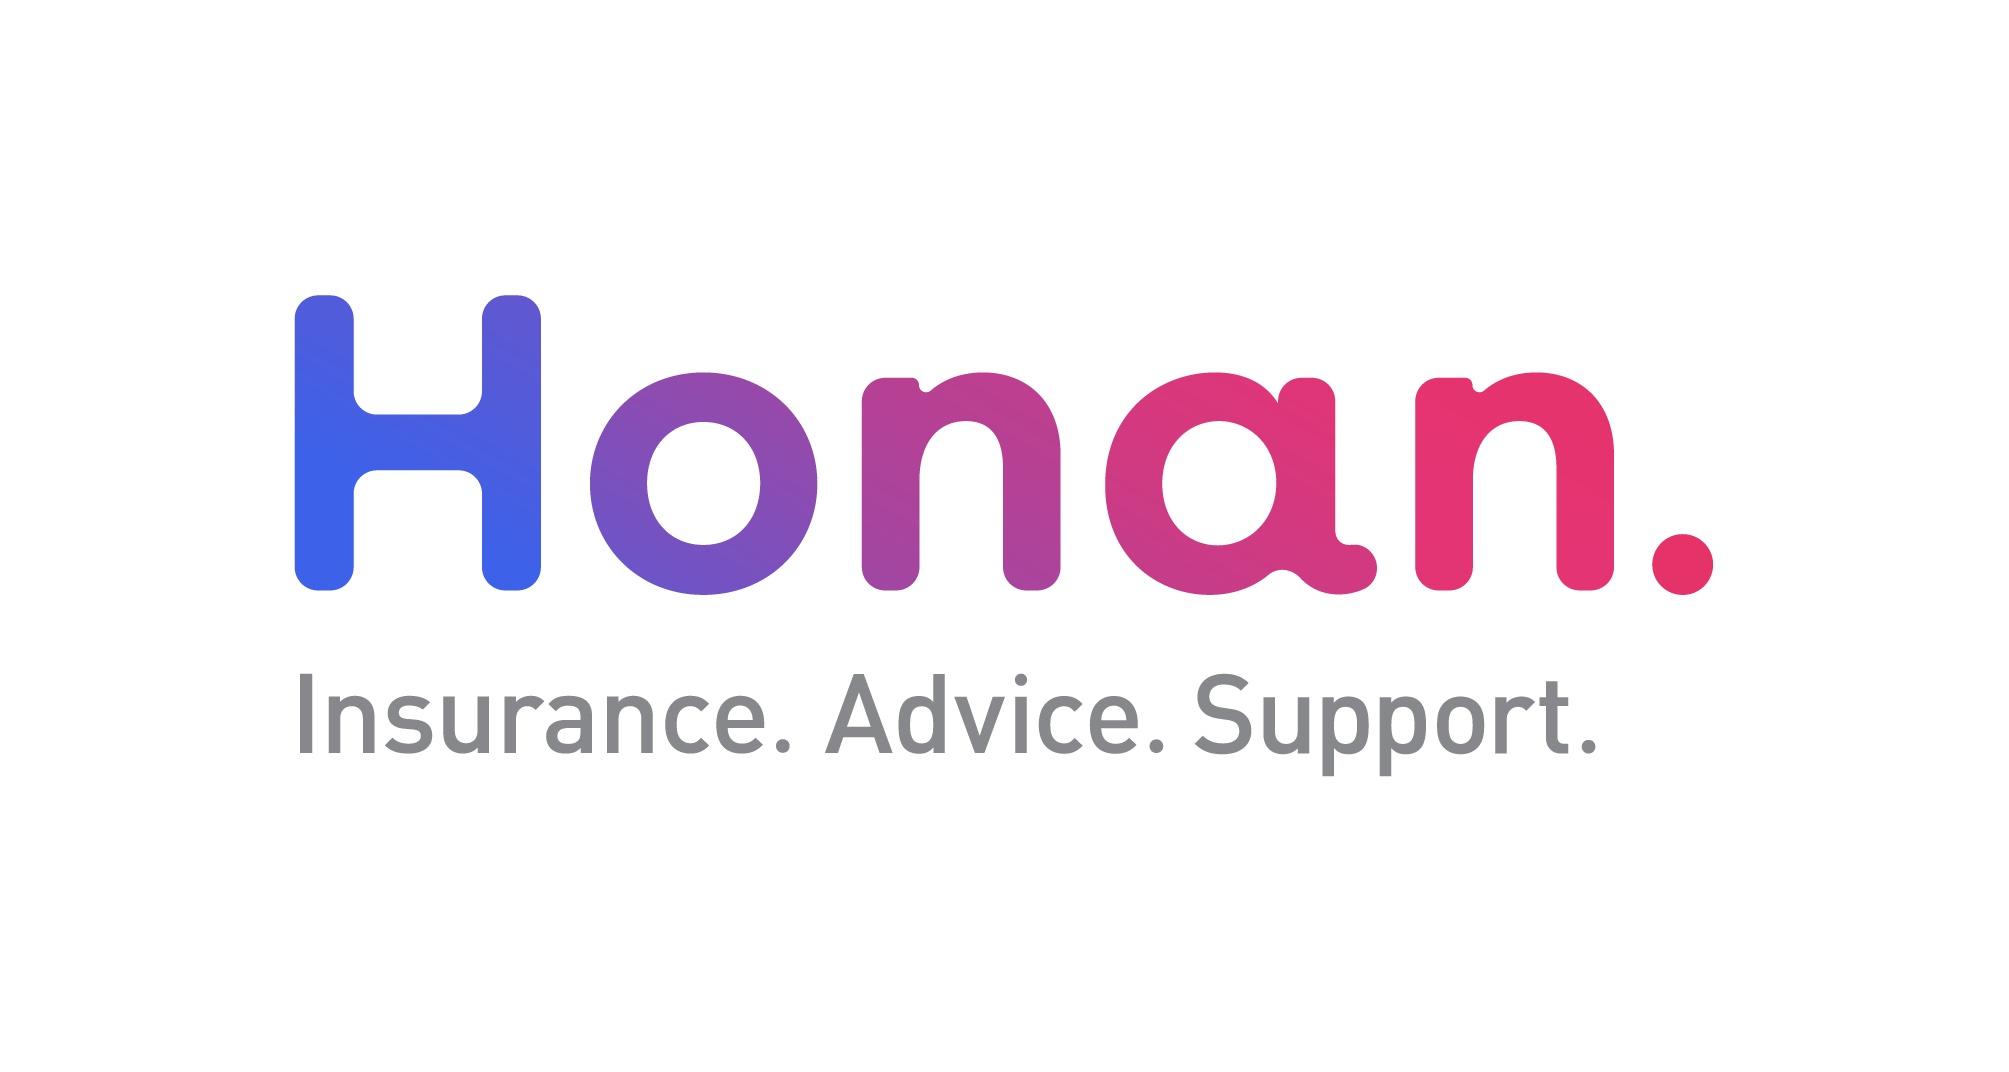 Honan Insurance Group